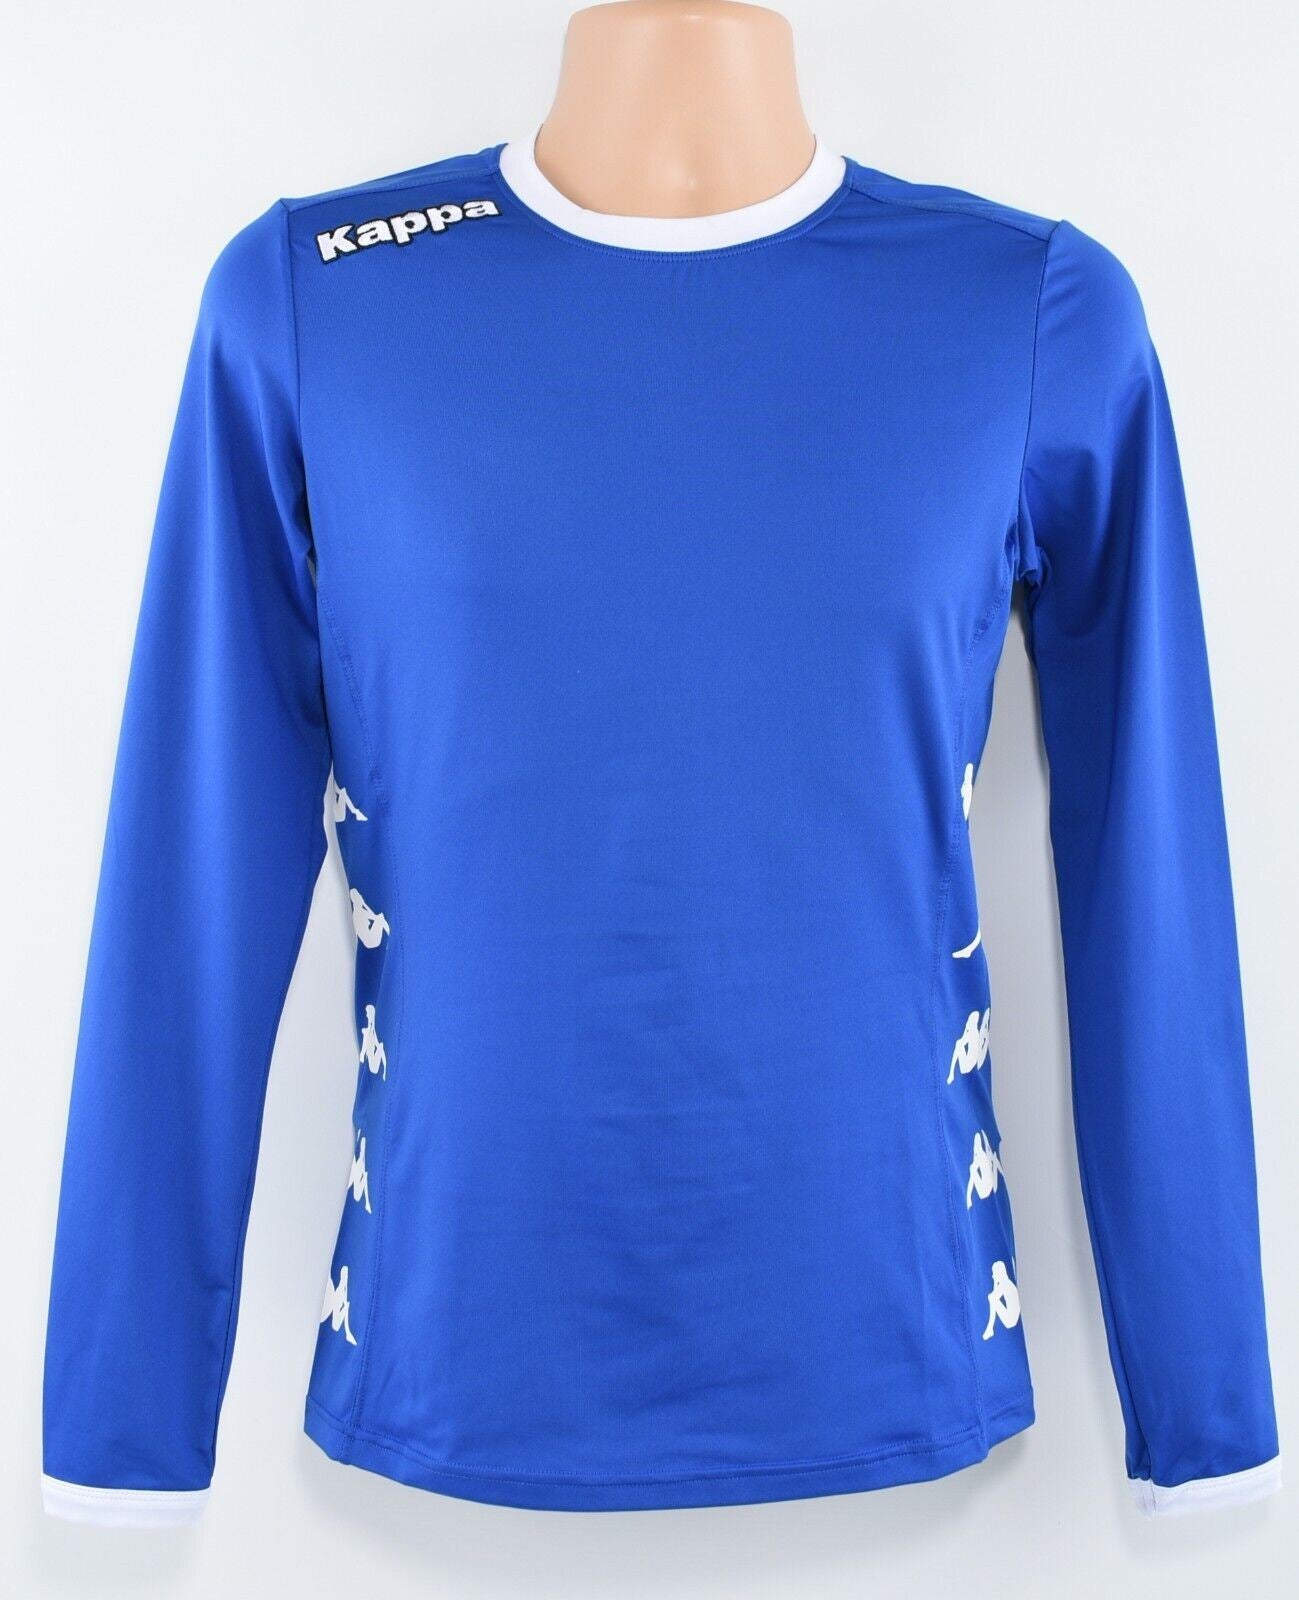 KAPPA Activewear: Men's Long Sleeve T-shirt Top, Nautical Blue, size S